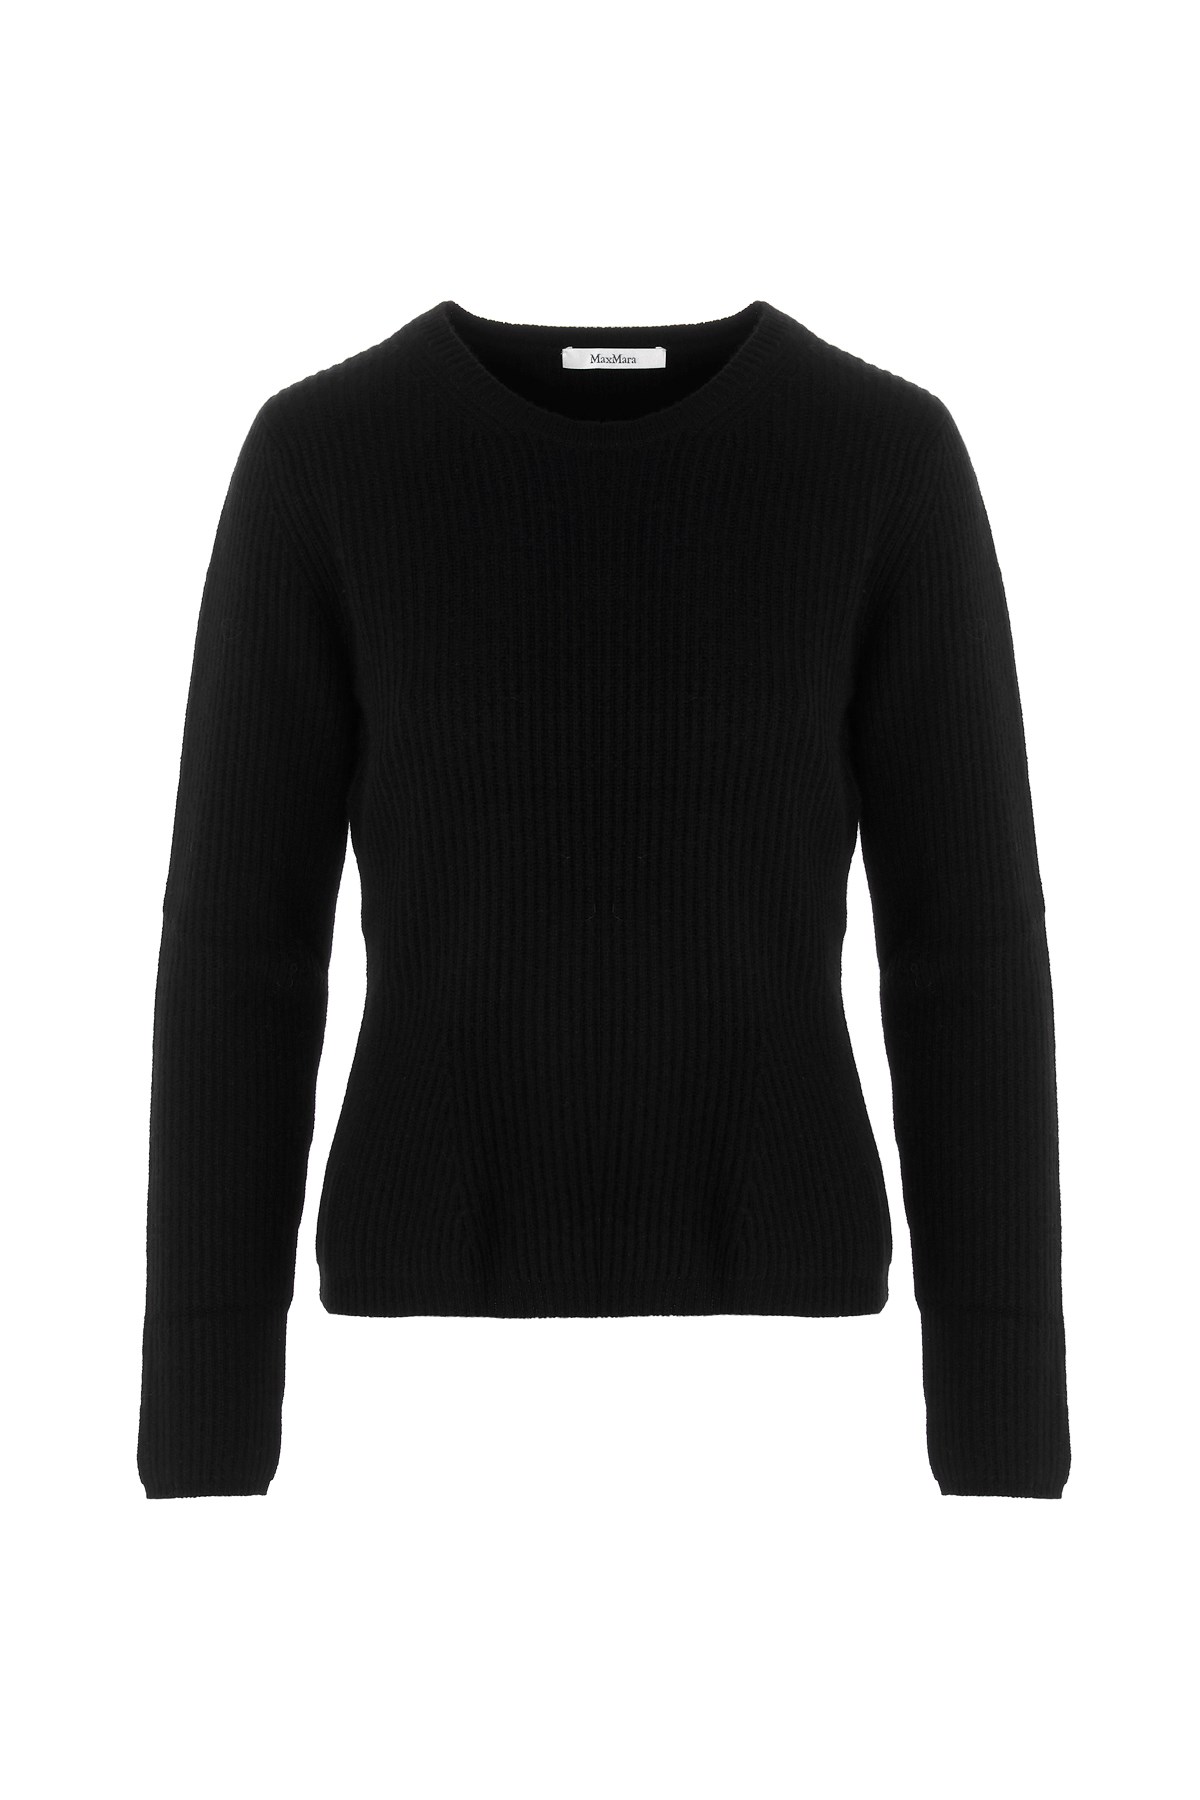 MAX MARA 'Peirak' Wool Sweater